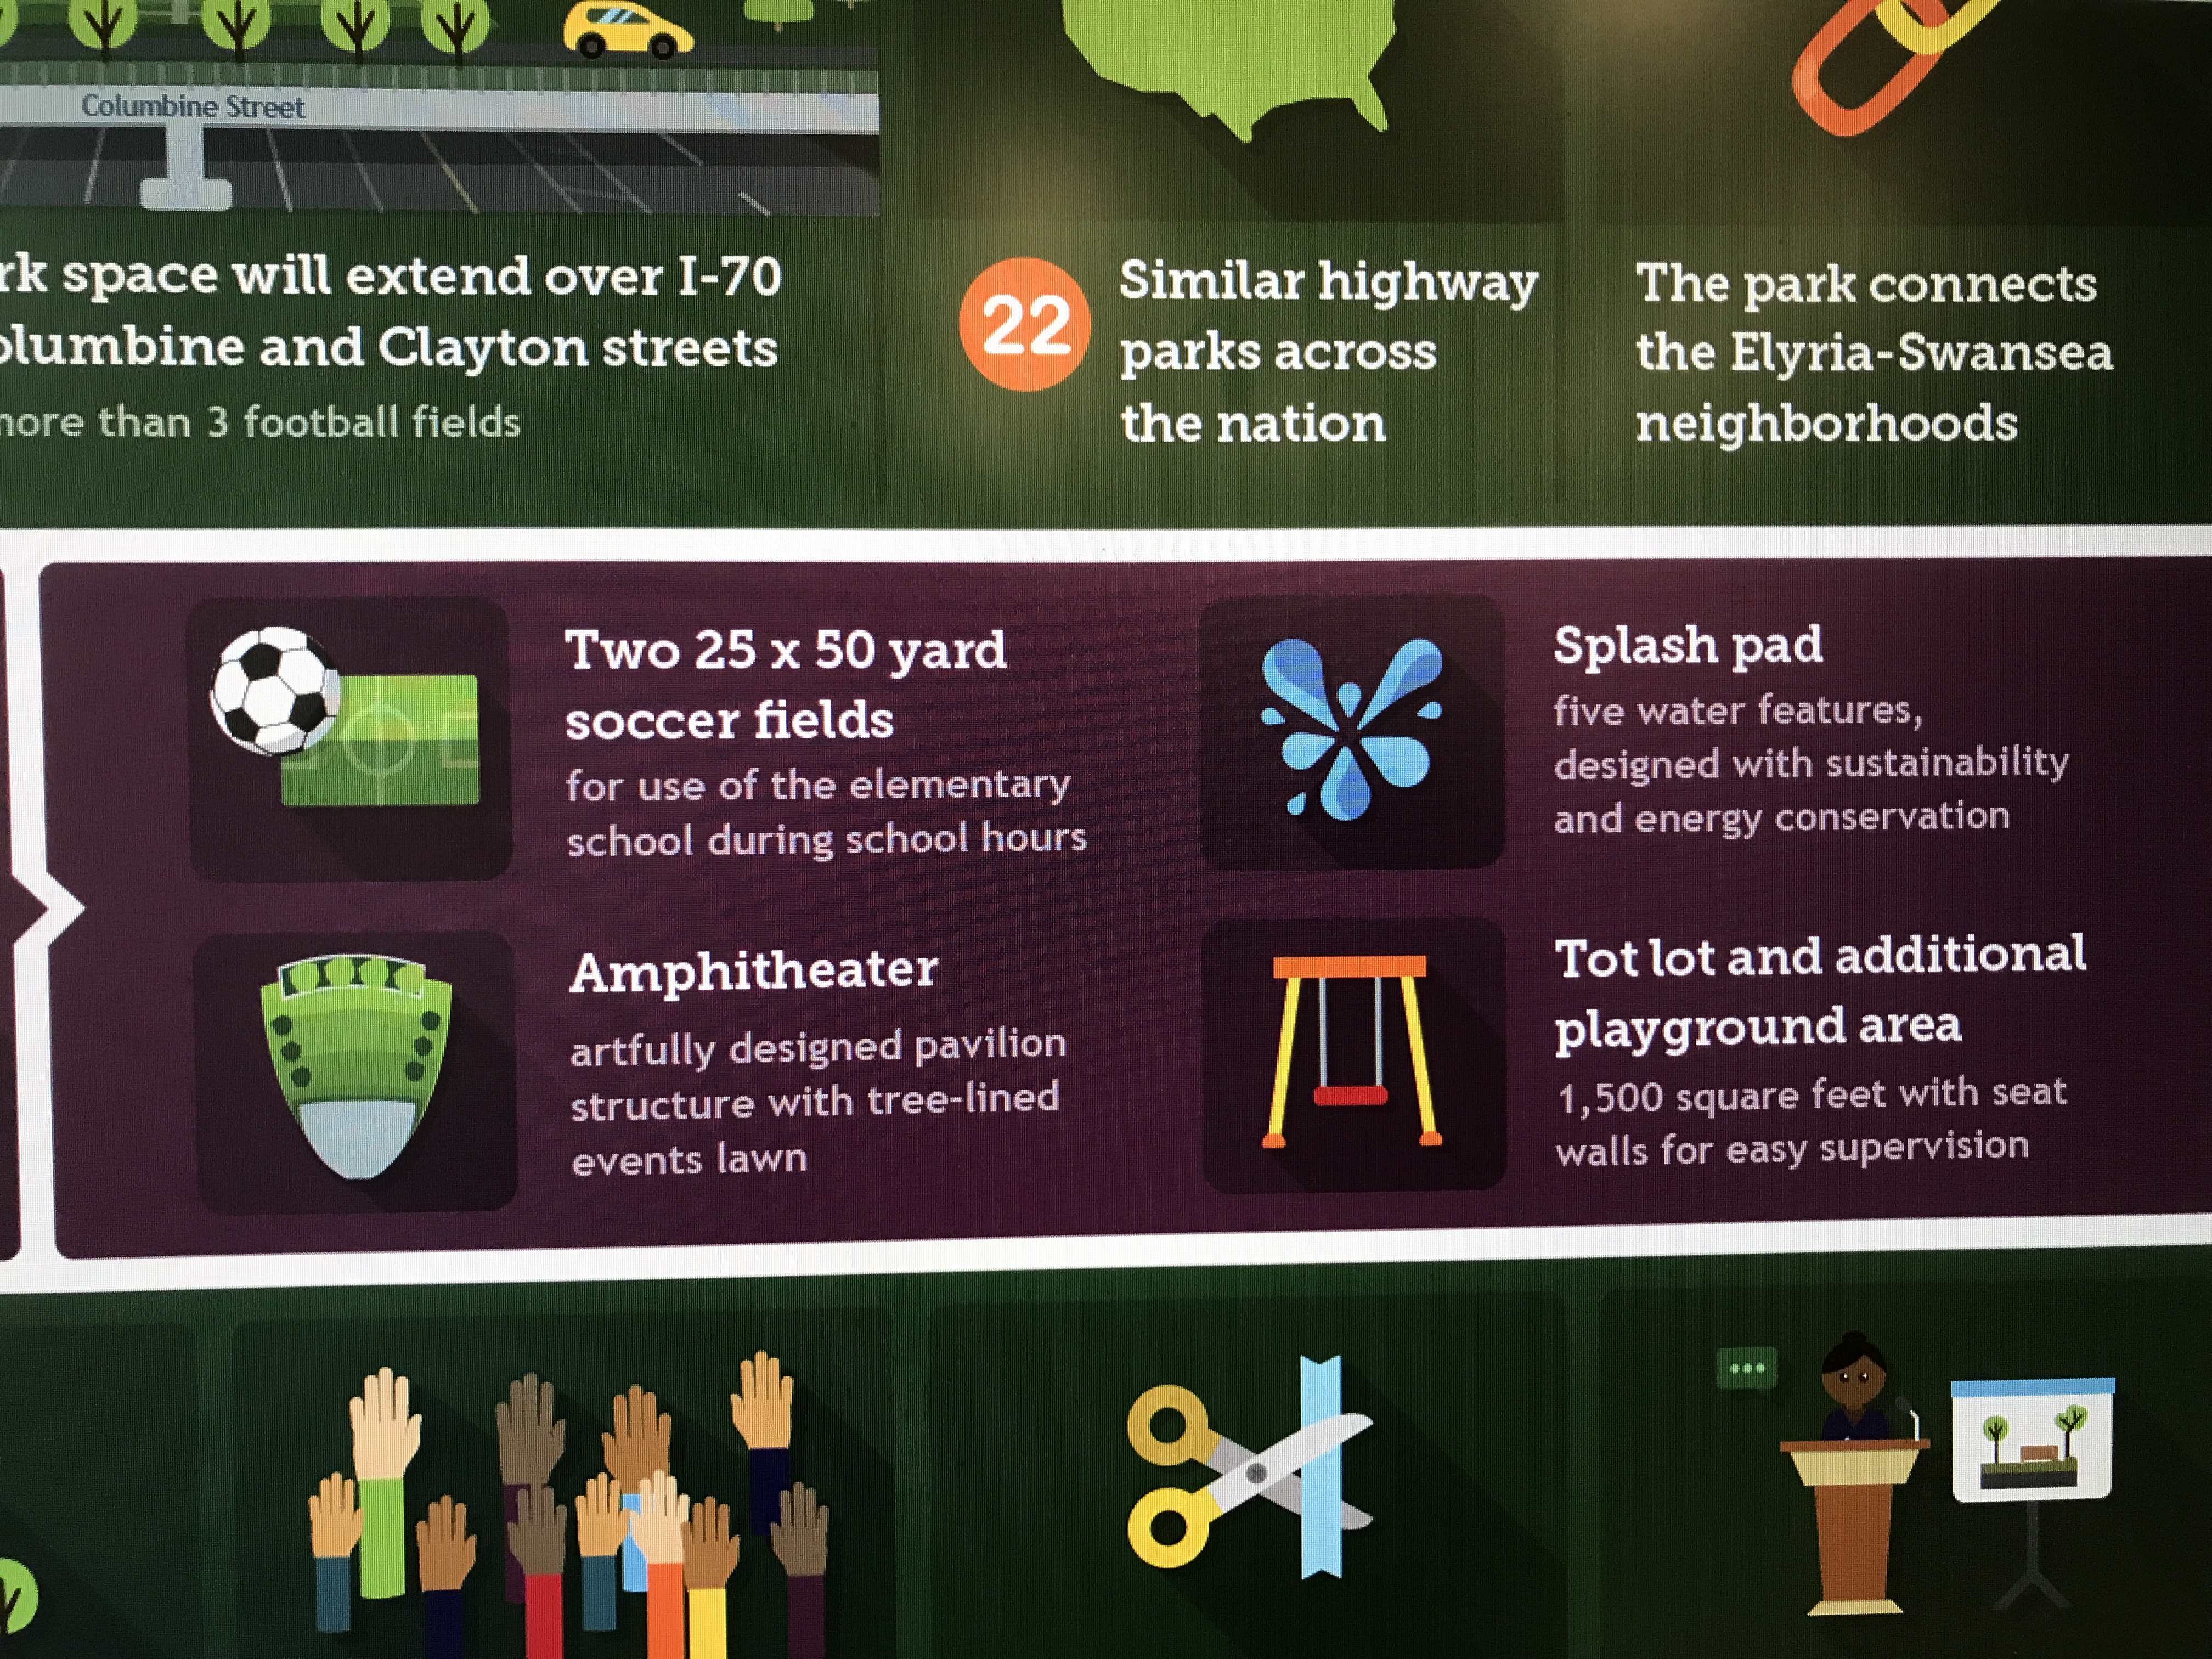 Park fun facts photo detail image